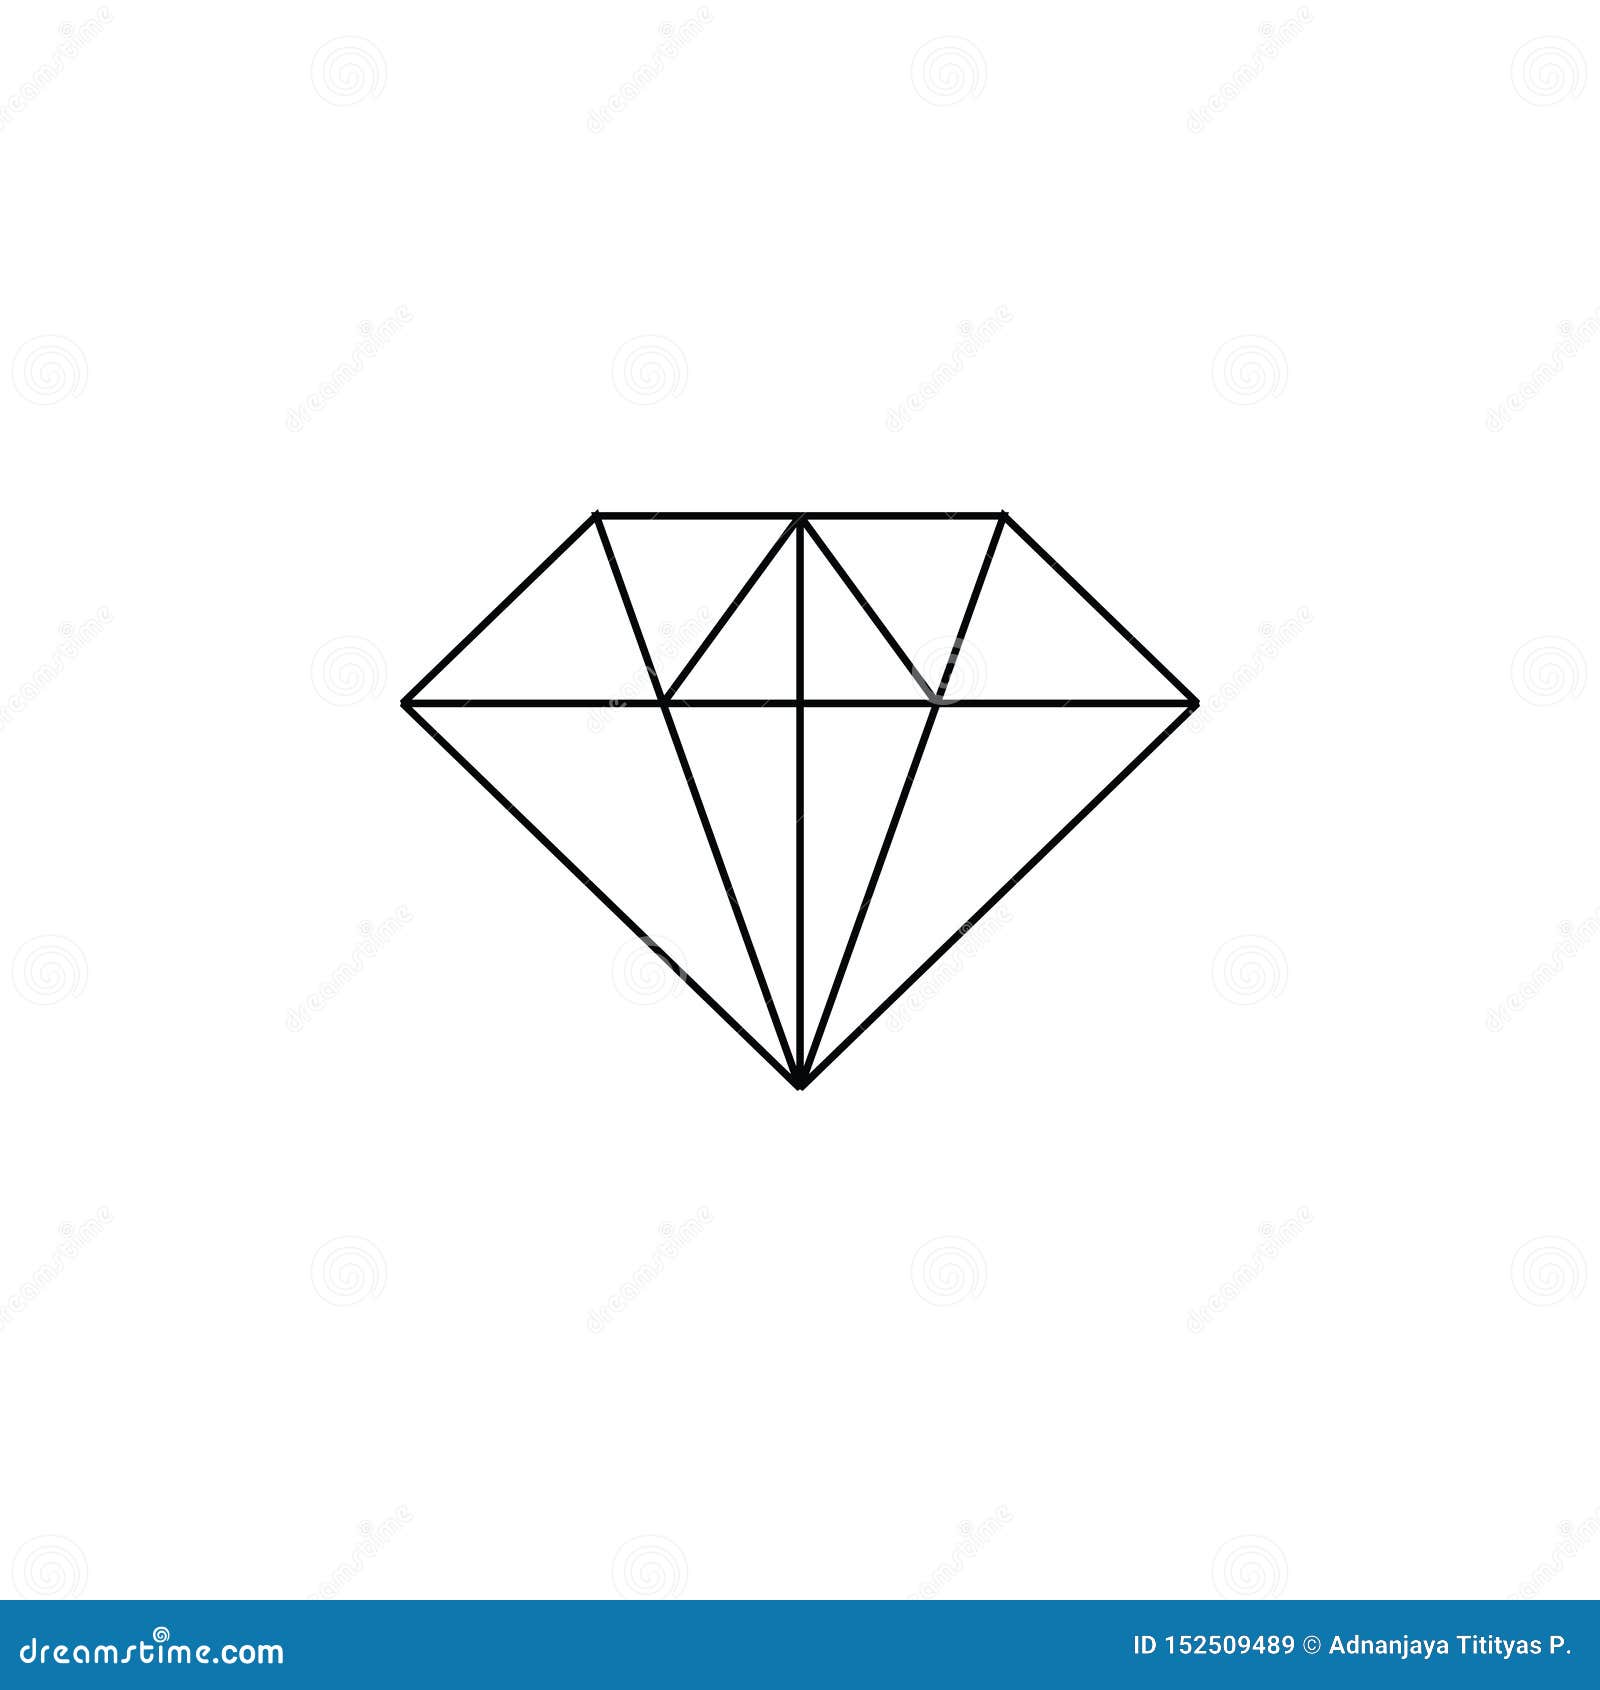 https://thumbs.dreamstime.com/z/simple-thin-line-diamond-shape-geometric-logo-vector-152509489.jpg